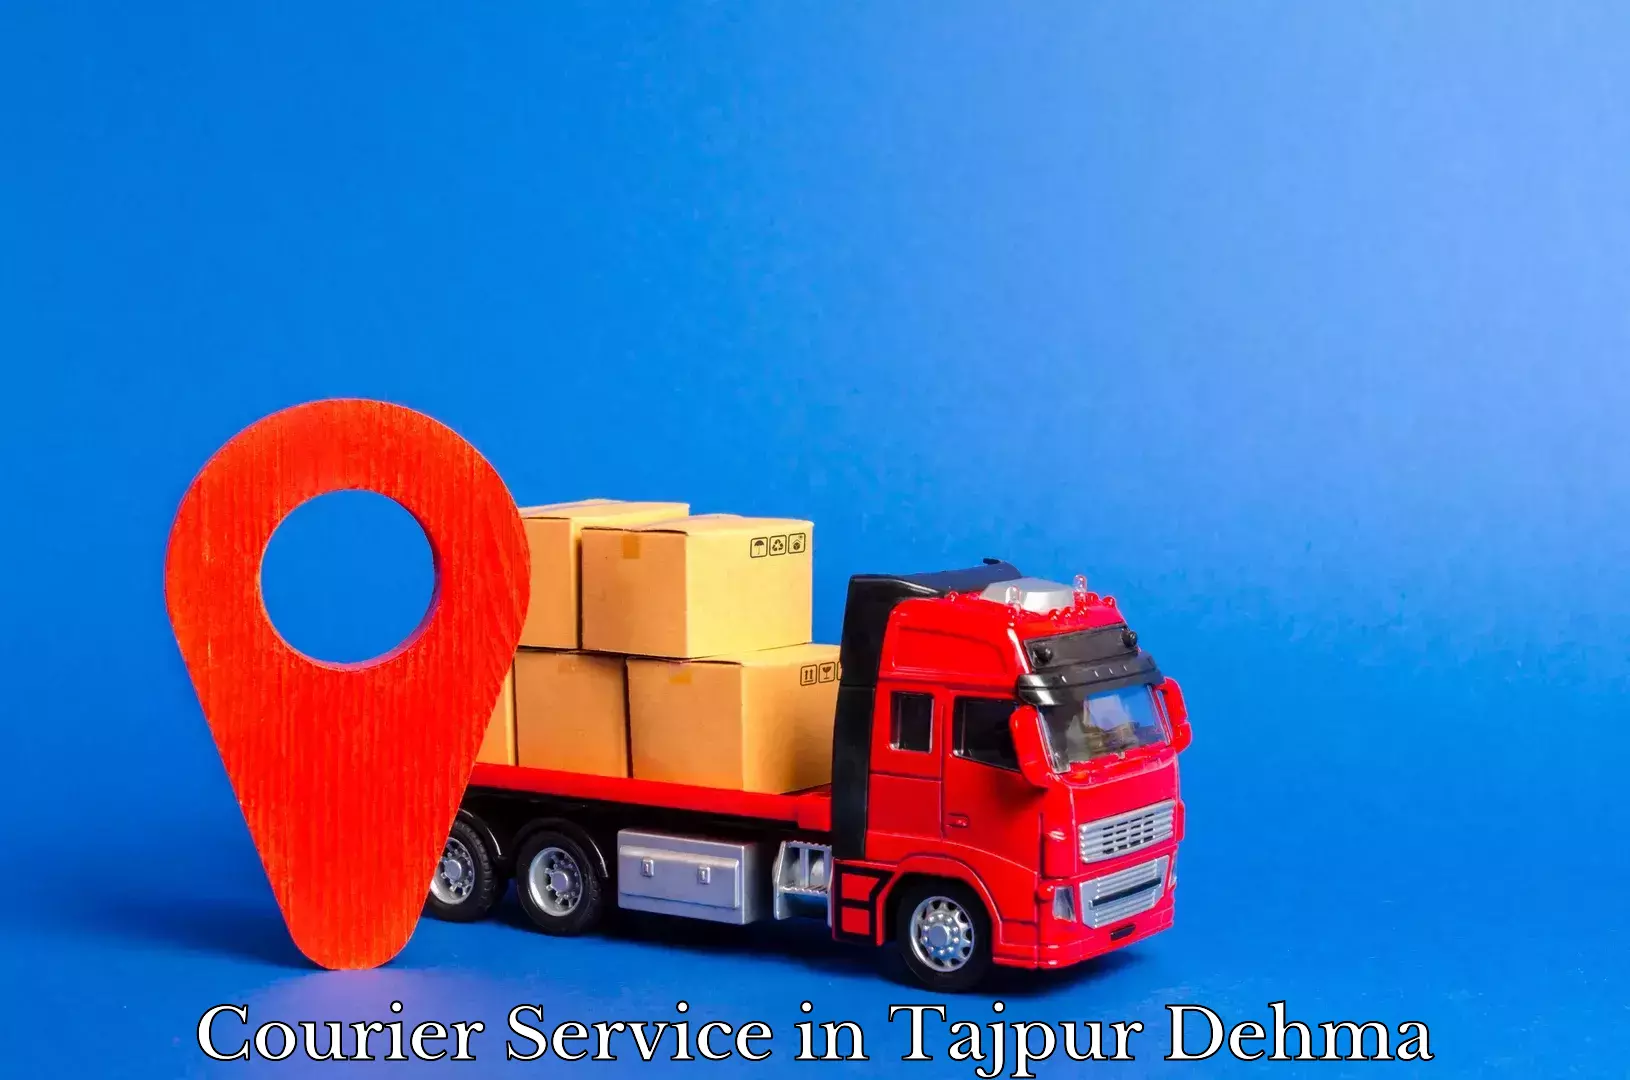 Individual parcel service in Tajpur Dehma